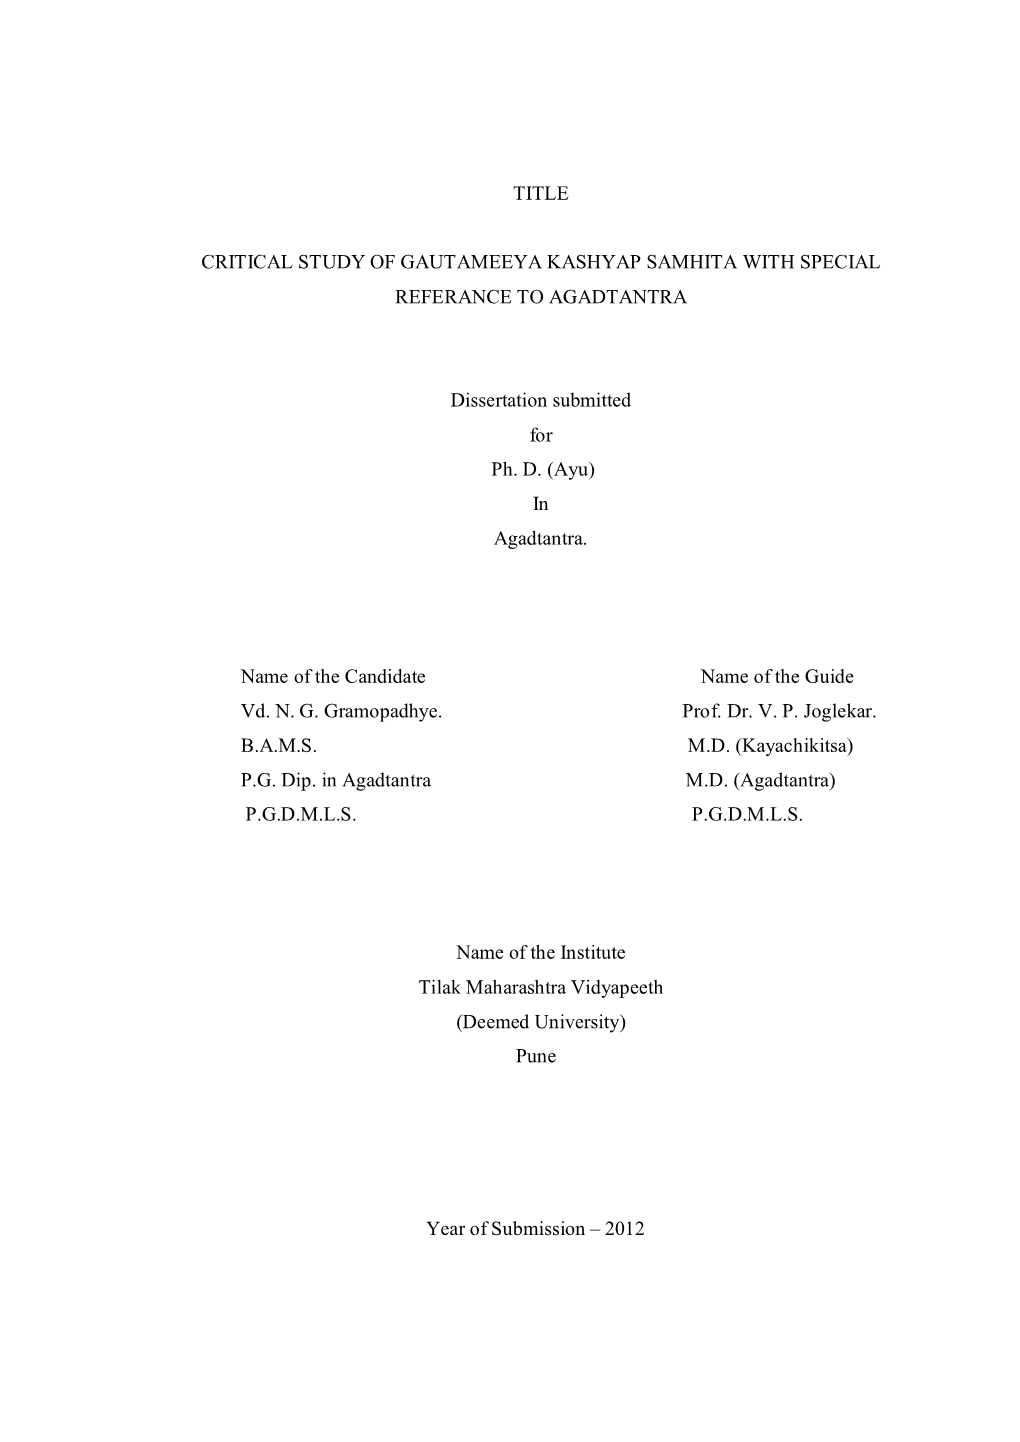 Title Critical Study of Gautameeya Kashyap